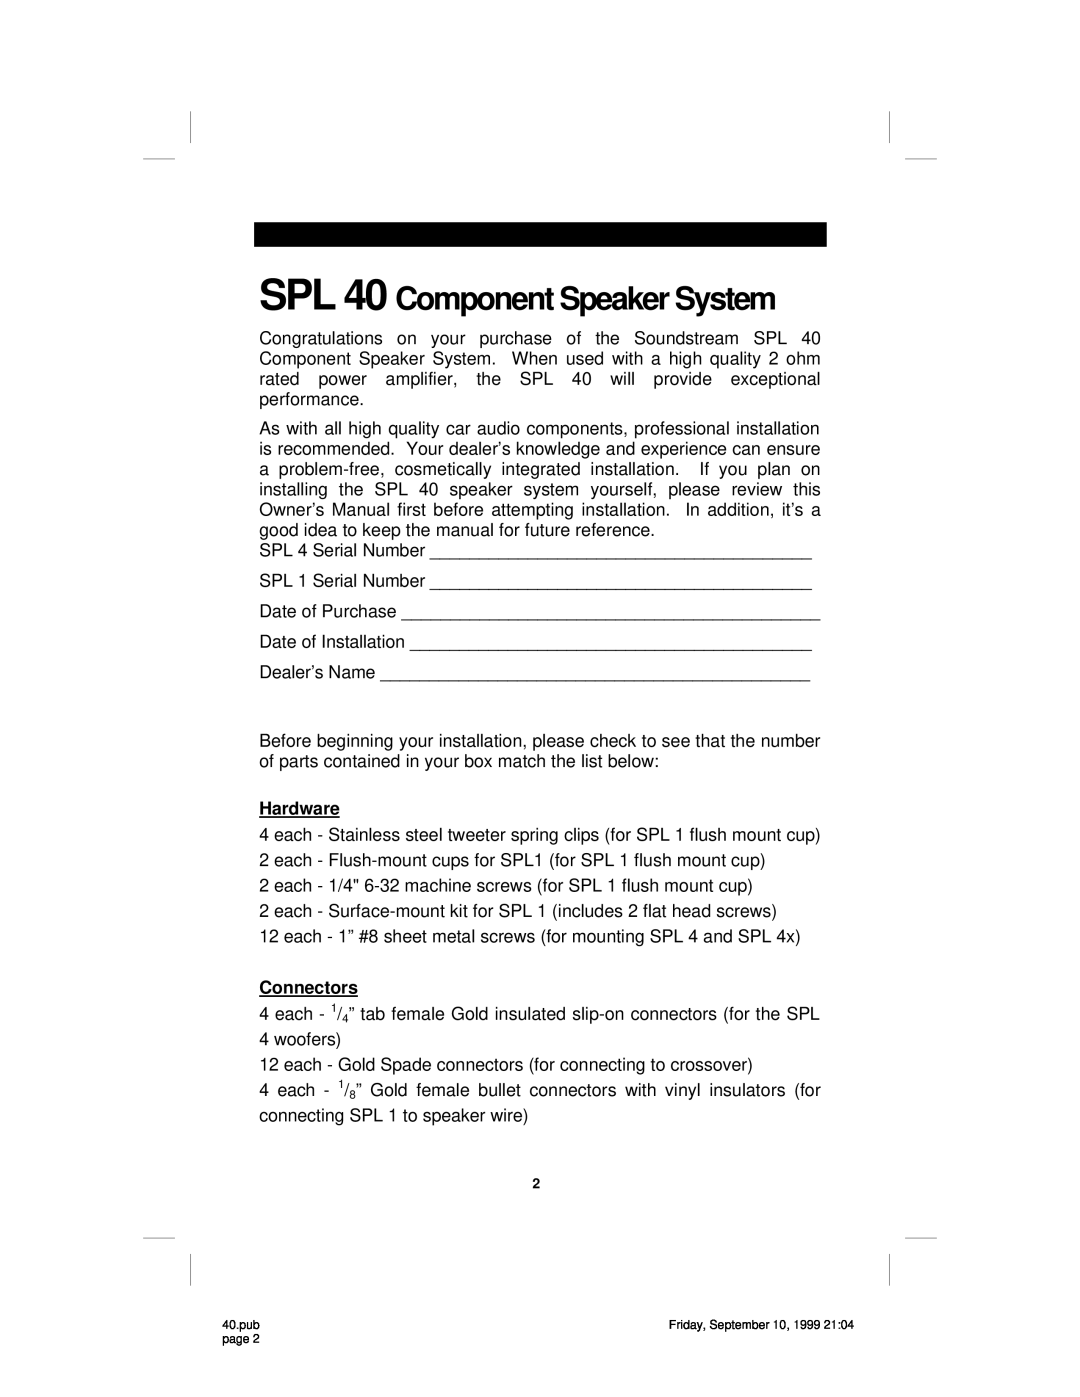 Soundstream Technologies SPL40 owner manual Hardware And, Parts List, Project, SPL 40 Component Speaker System 